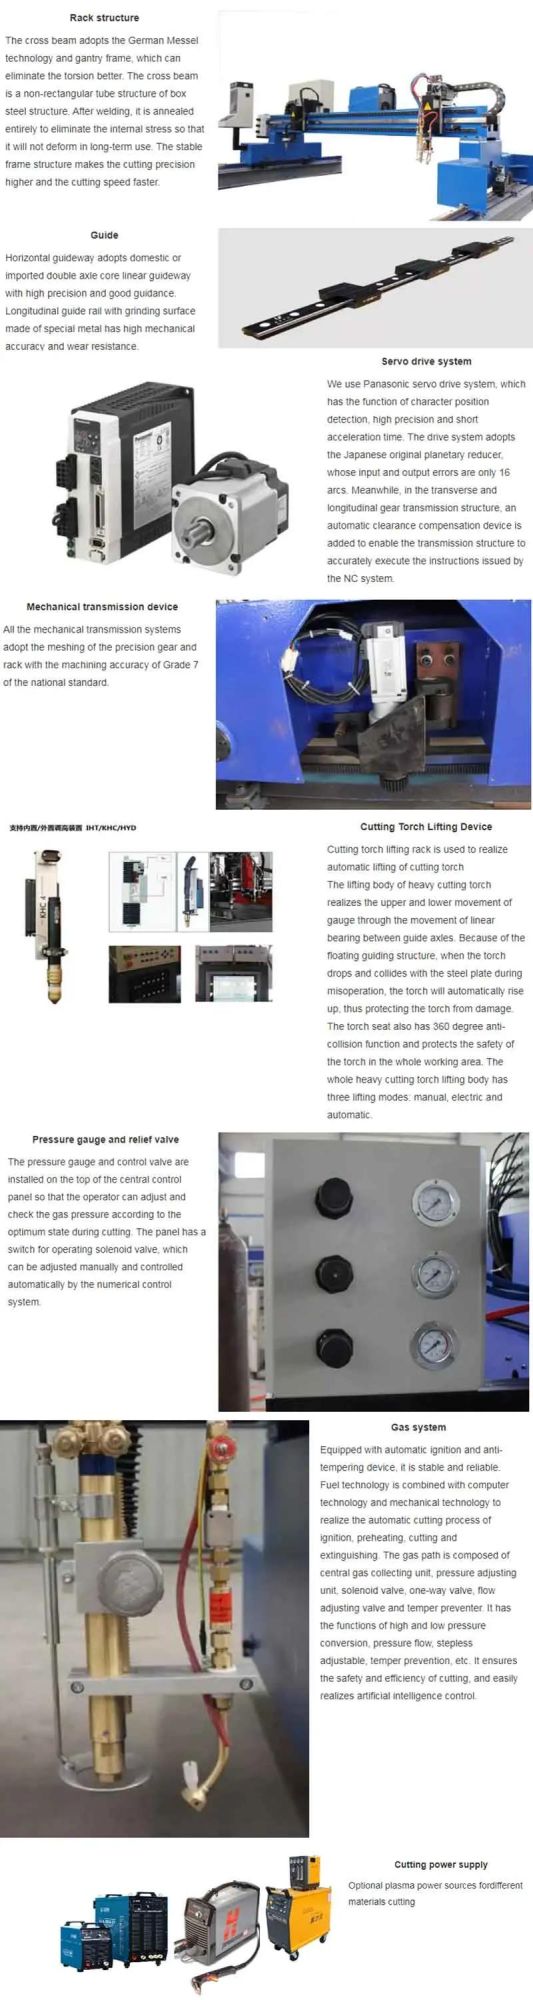 CNC Plasma & Flame Cutting Machinery Product Line